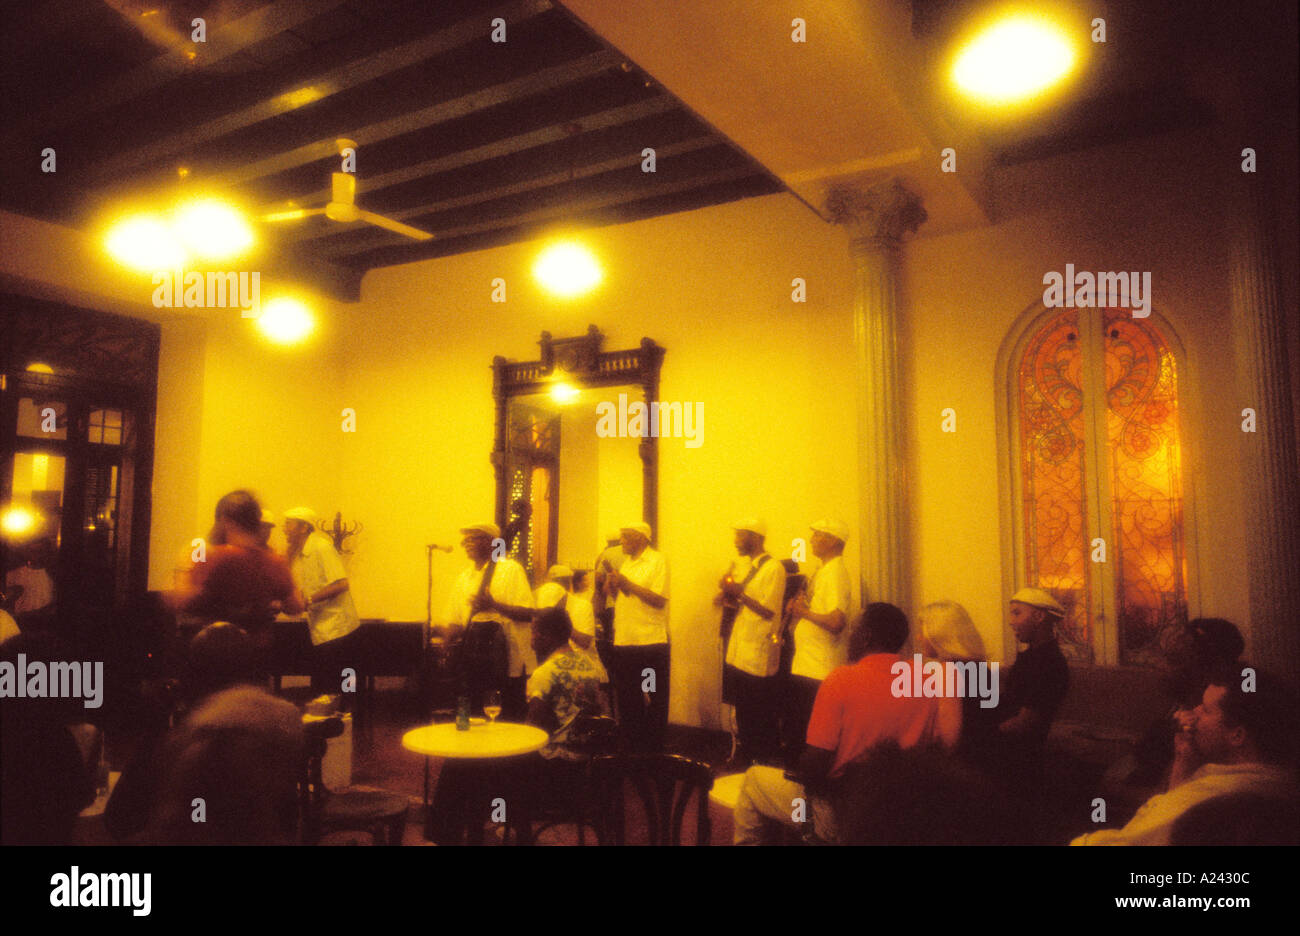 Cuba Havana Musicians playing in a bar Stock Photo